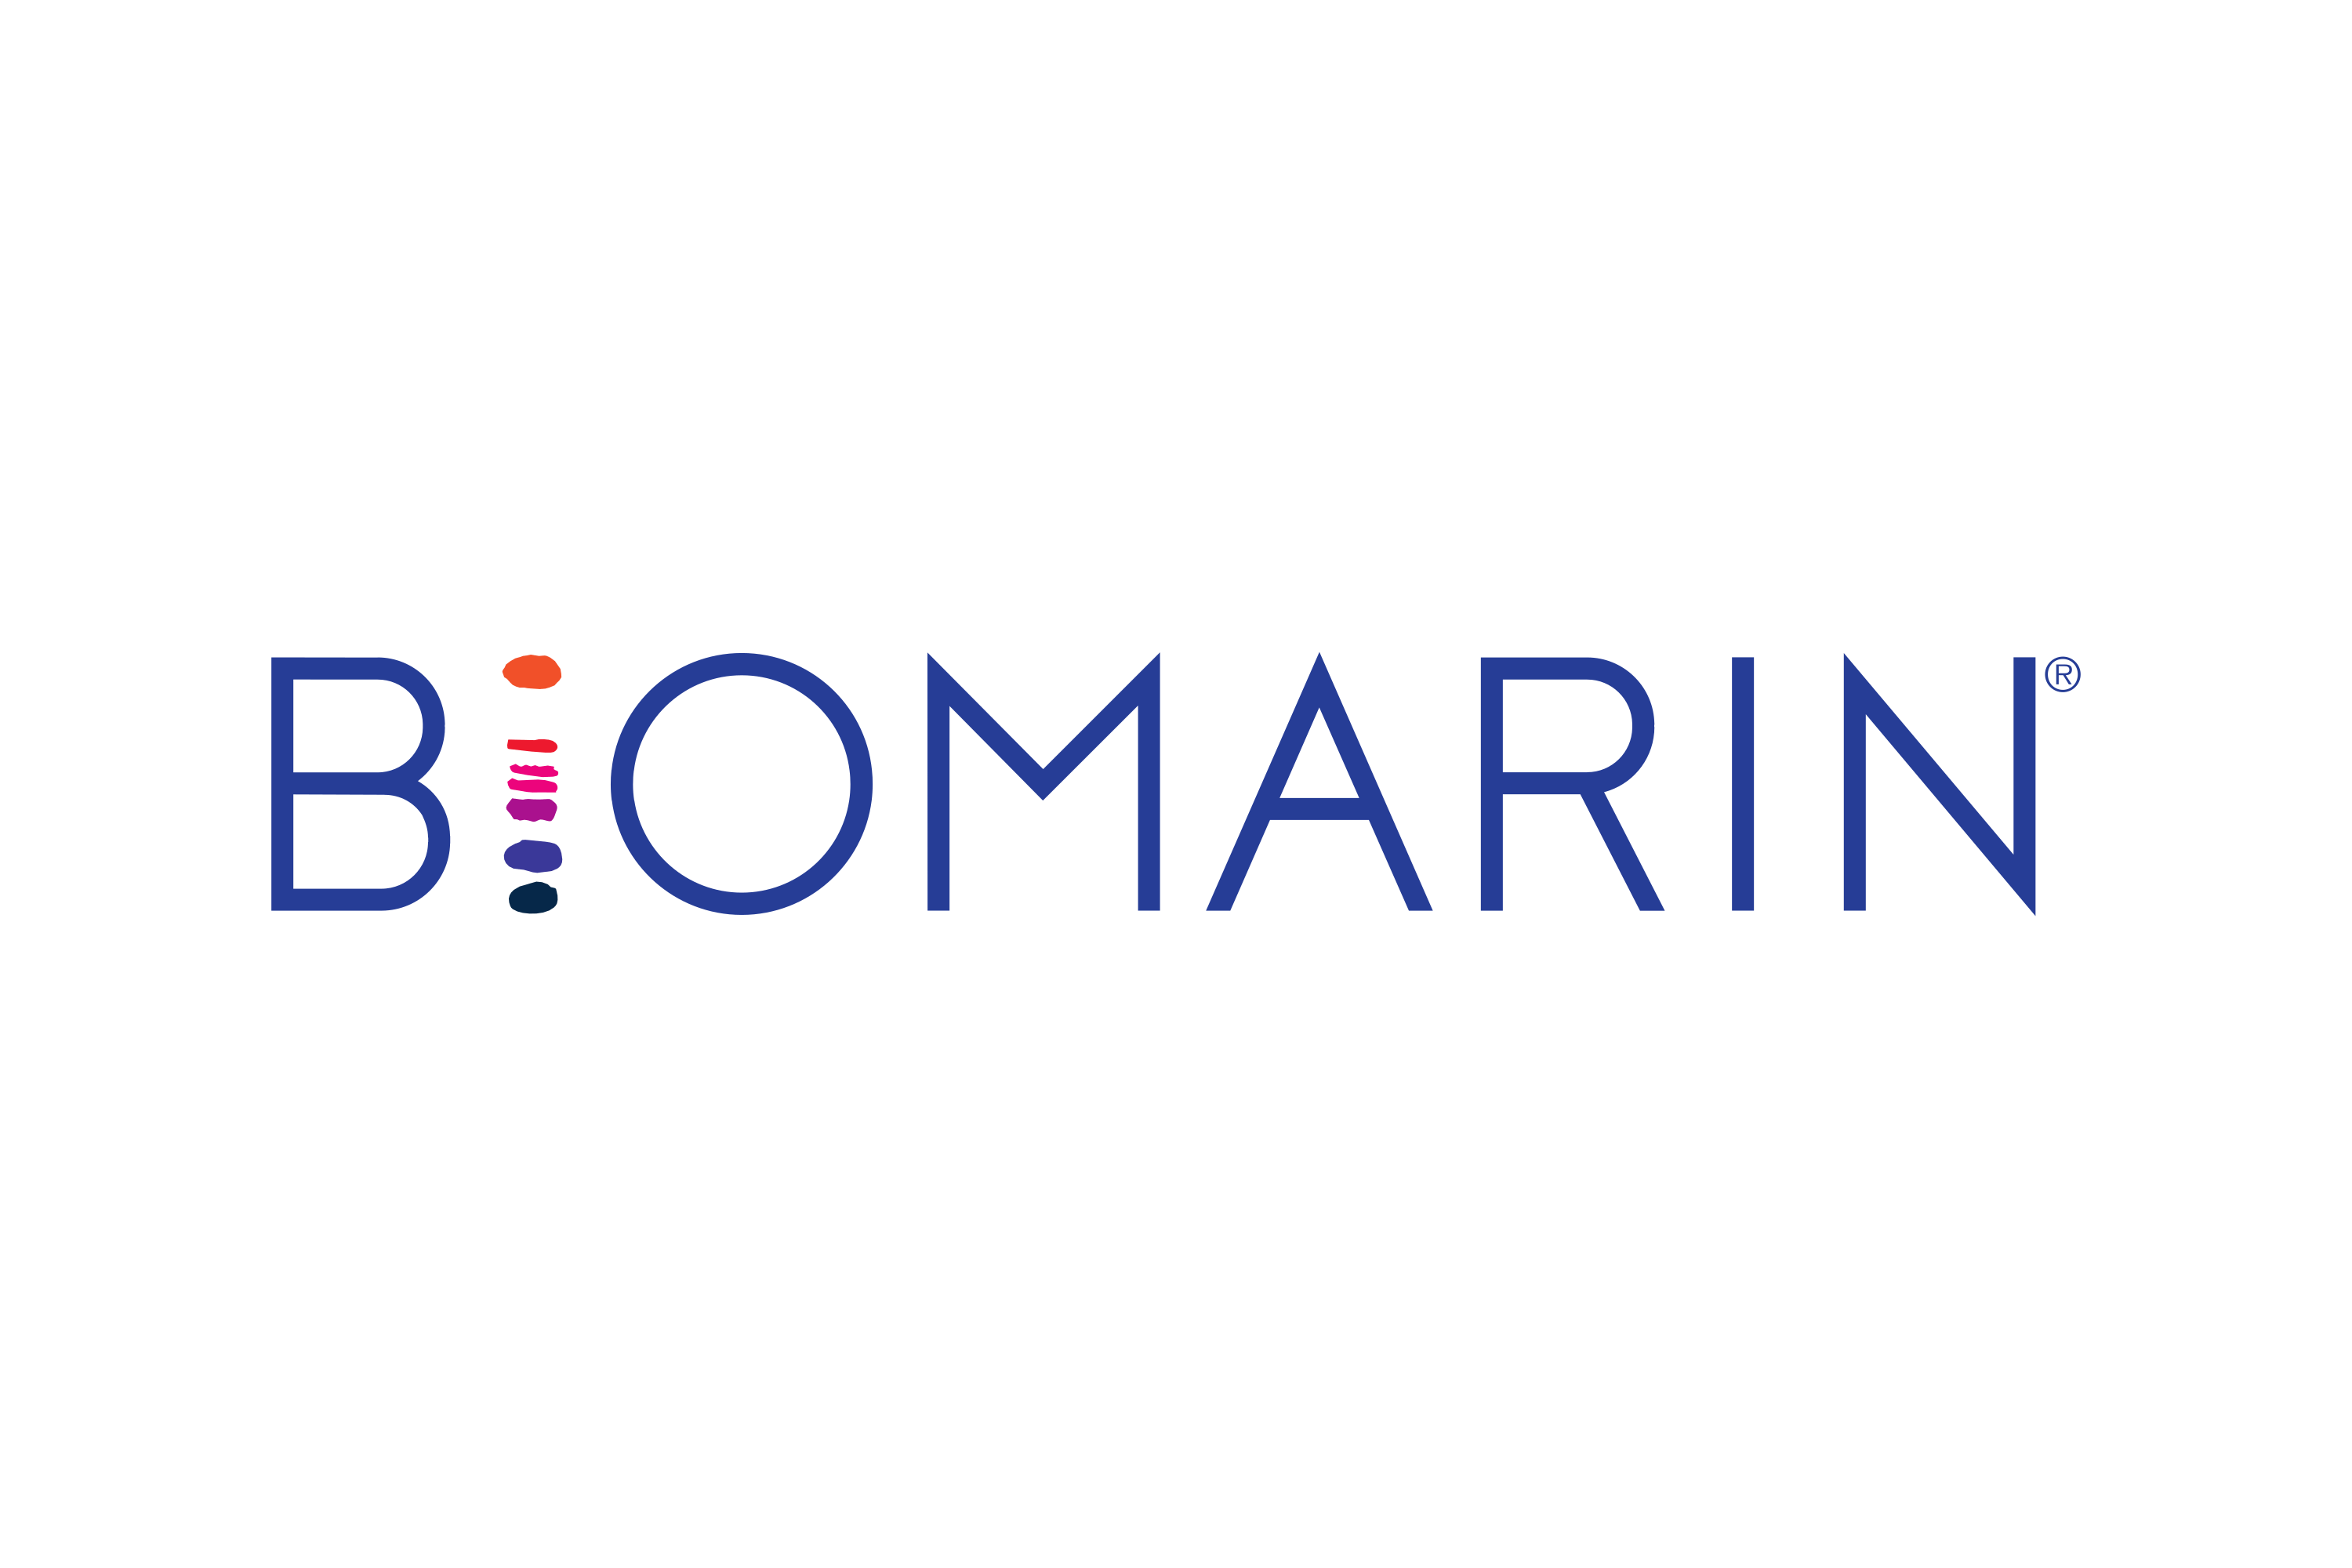 BioMarin Pharmaceutical Logo